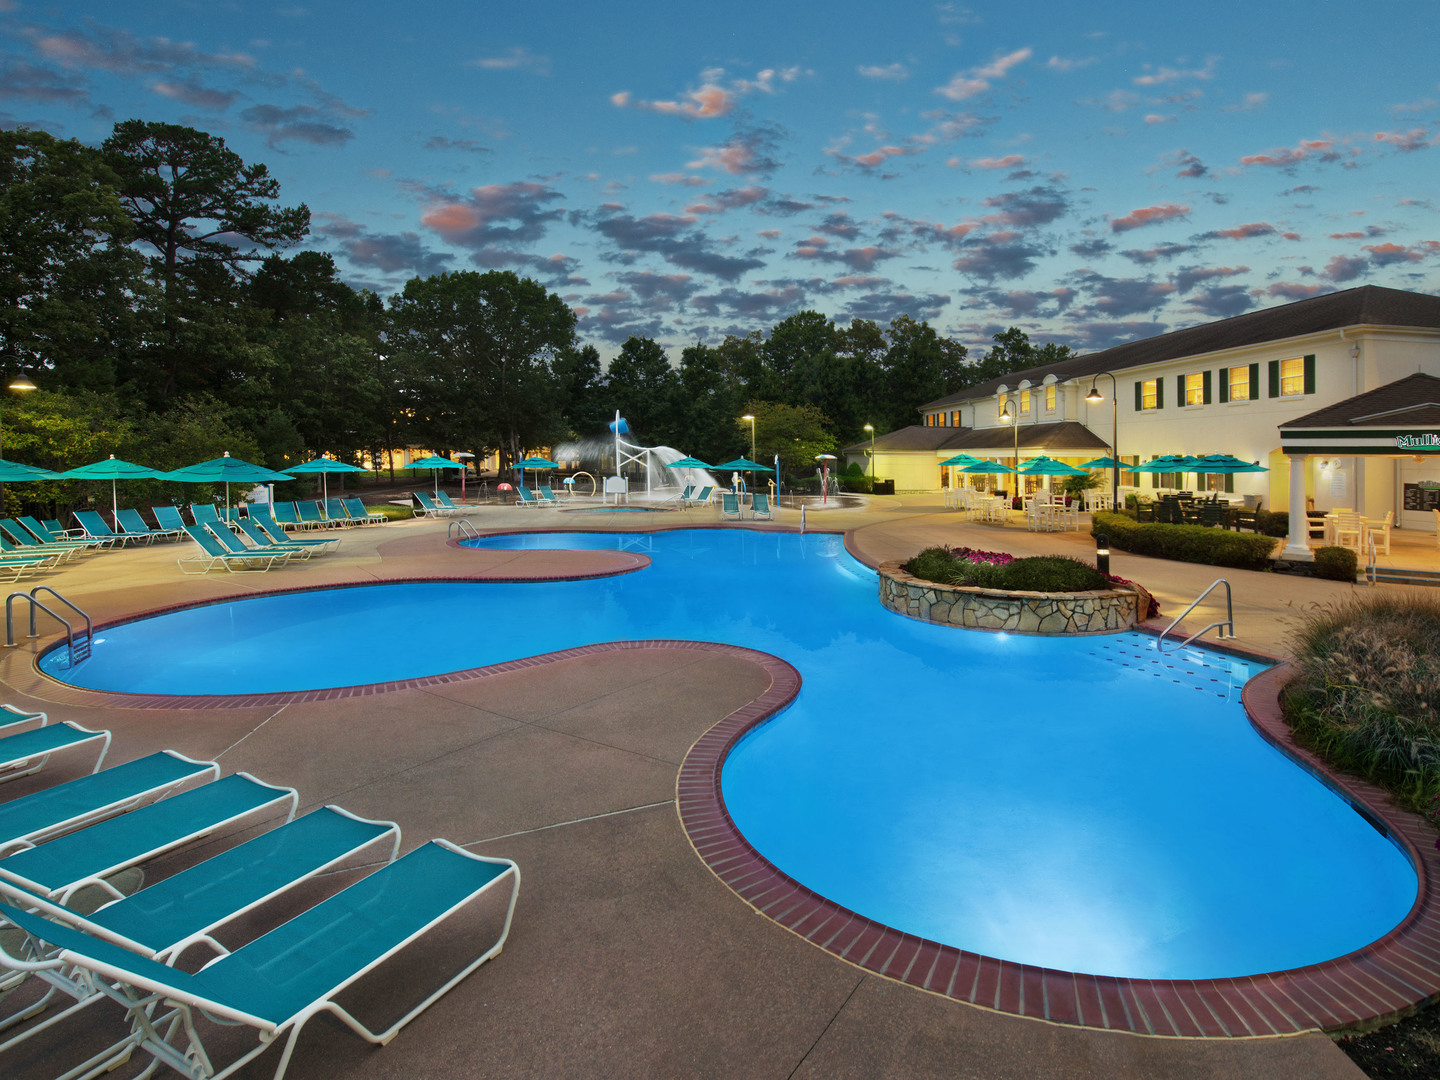 Marriott's Fairway Villas Pool. Marriott's Fairway Villas is located in Galloway, New Jersey United States.